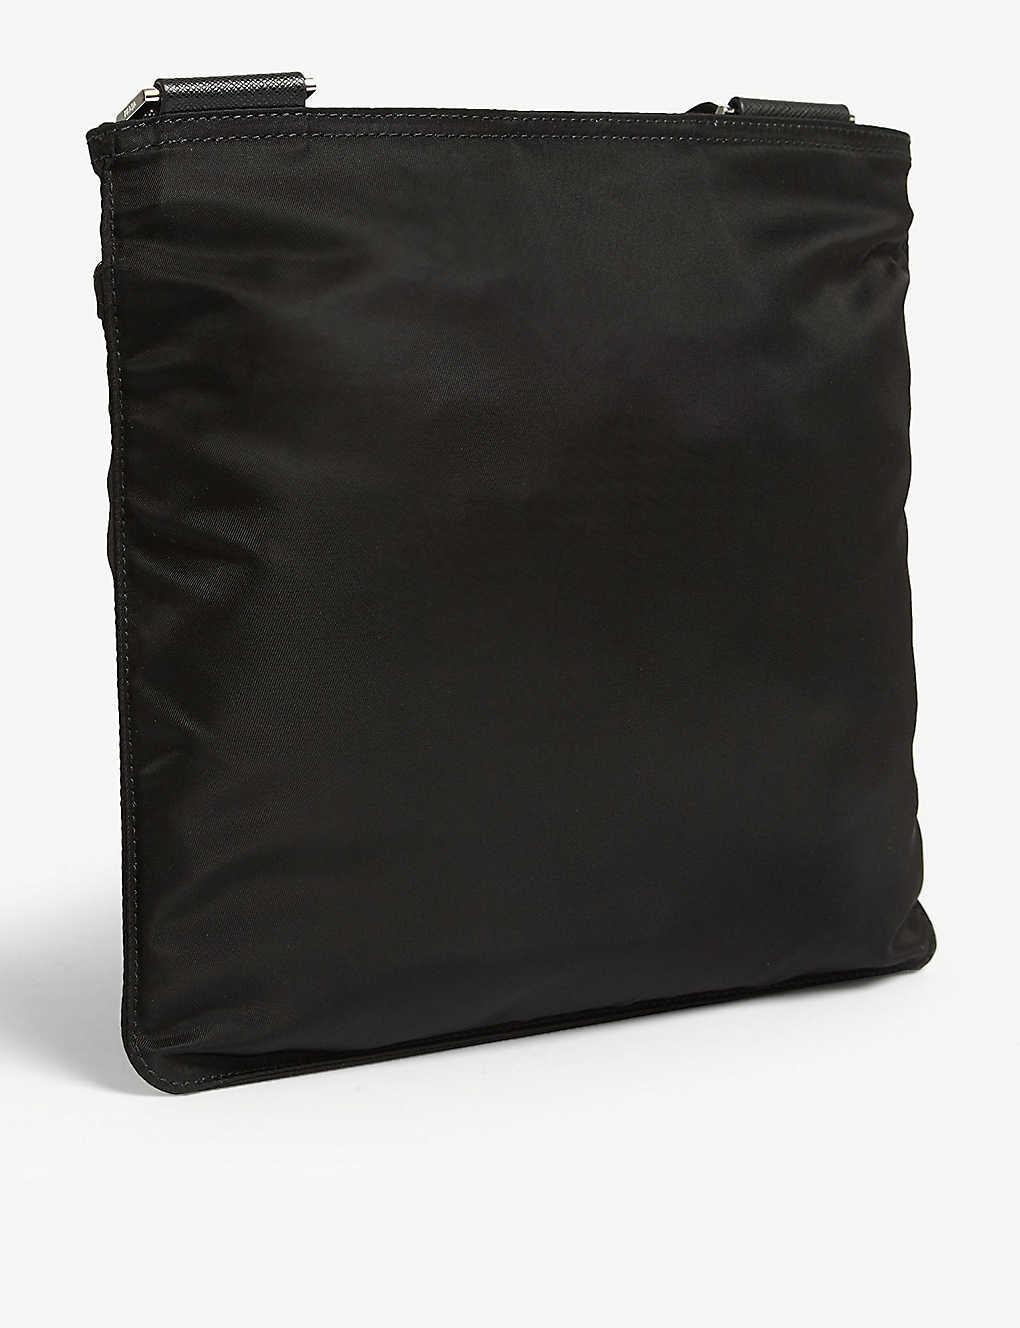 Prada Synthetic Triangle-logo Nylon Messenger Bag in Black - Lyst